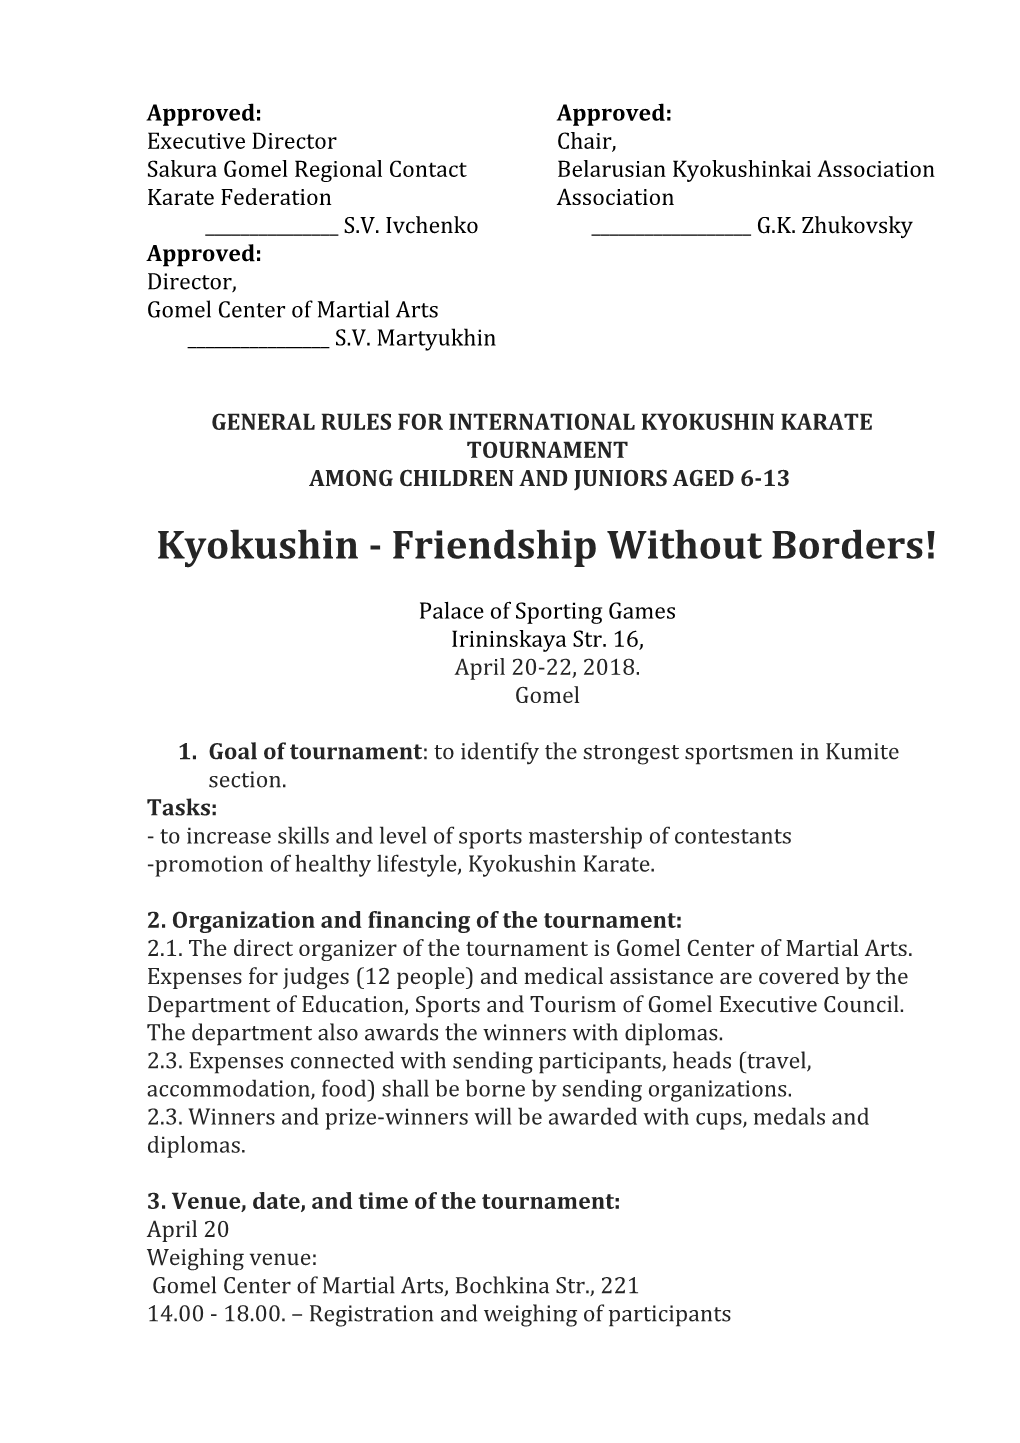 General Rules for International Kyokushin Karate